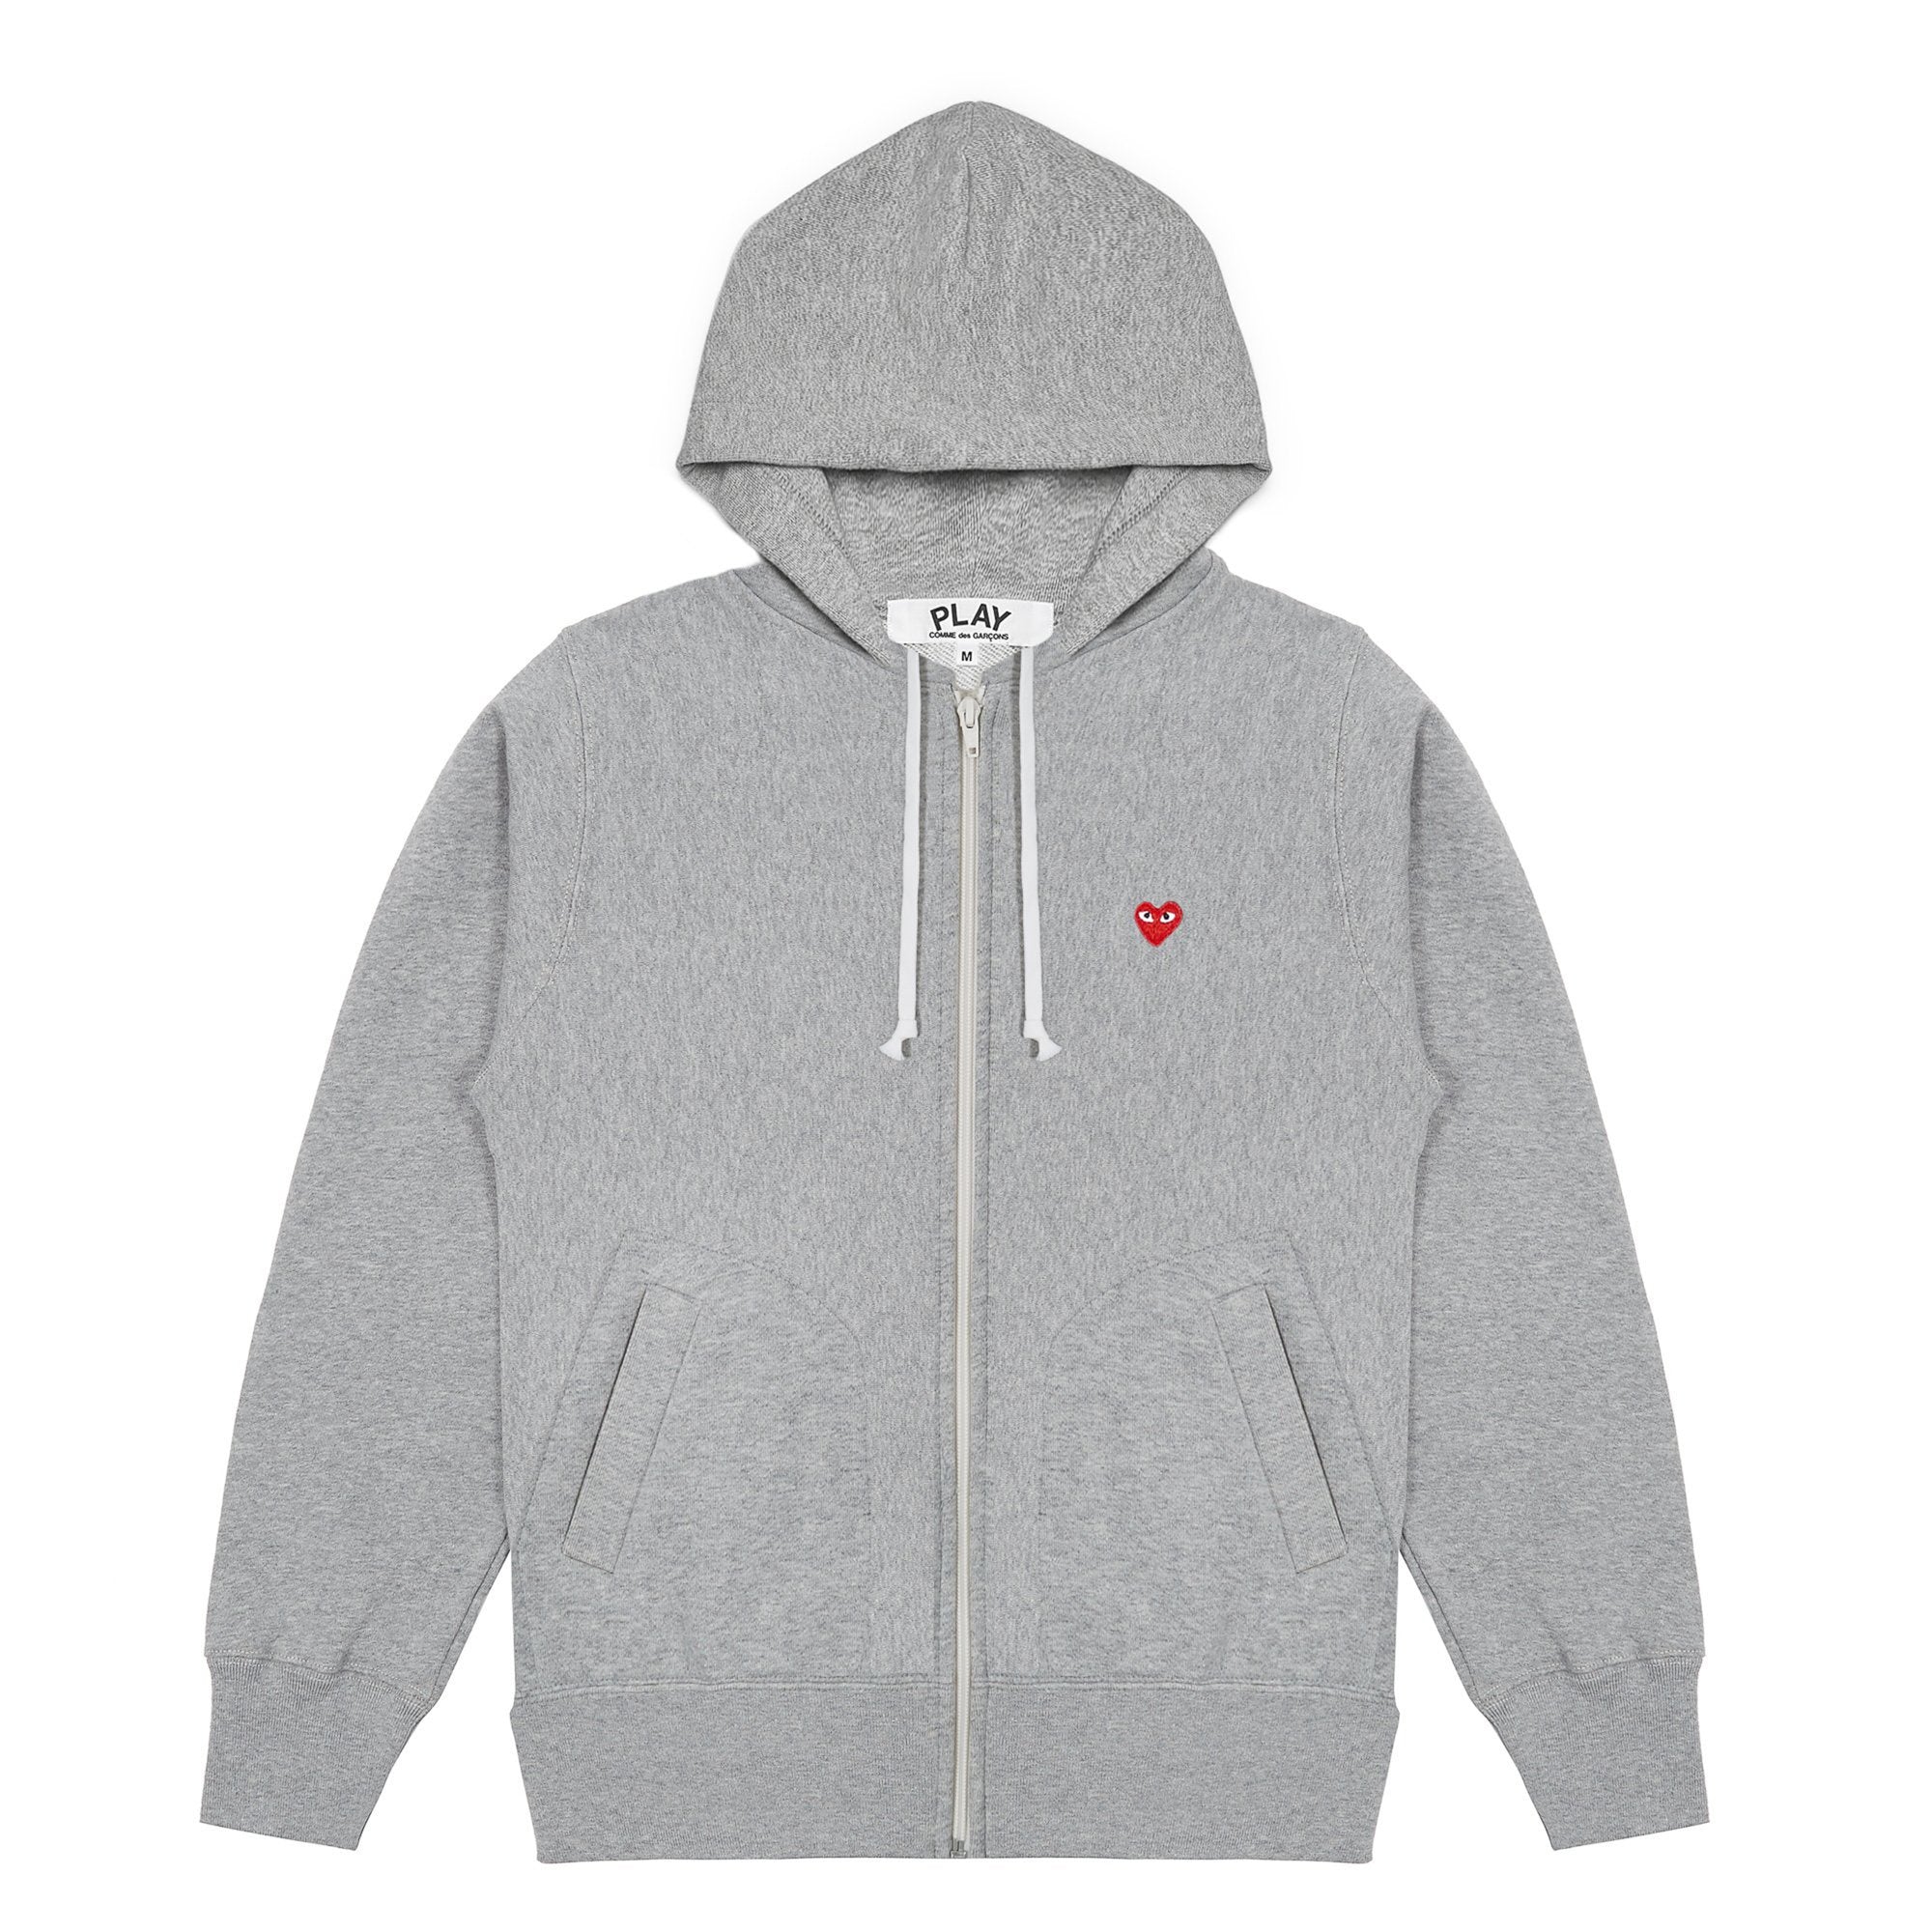 PLAY Small Emblem Zip Hooded Sweatshirt (Grey)